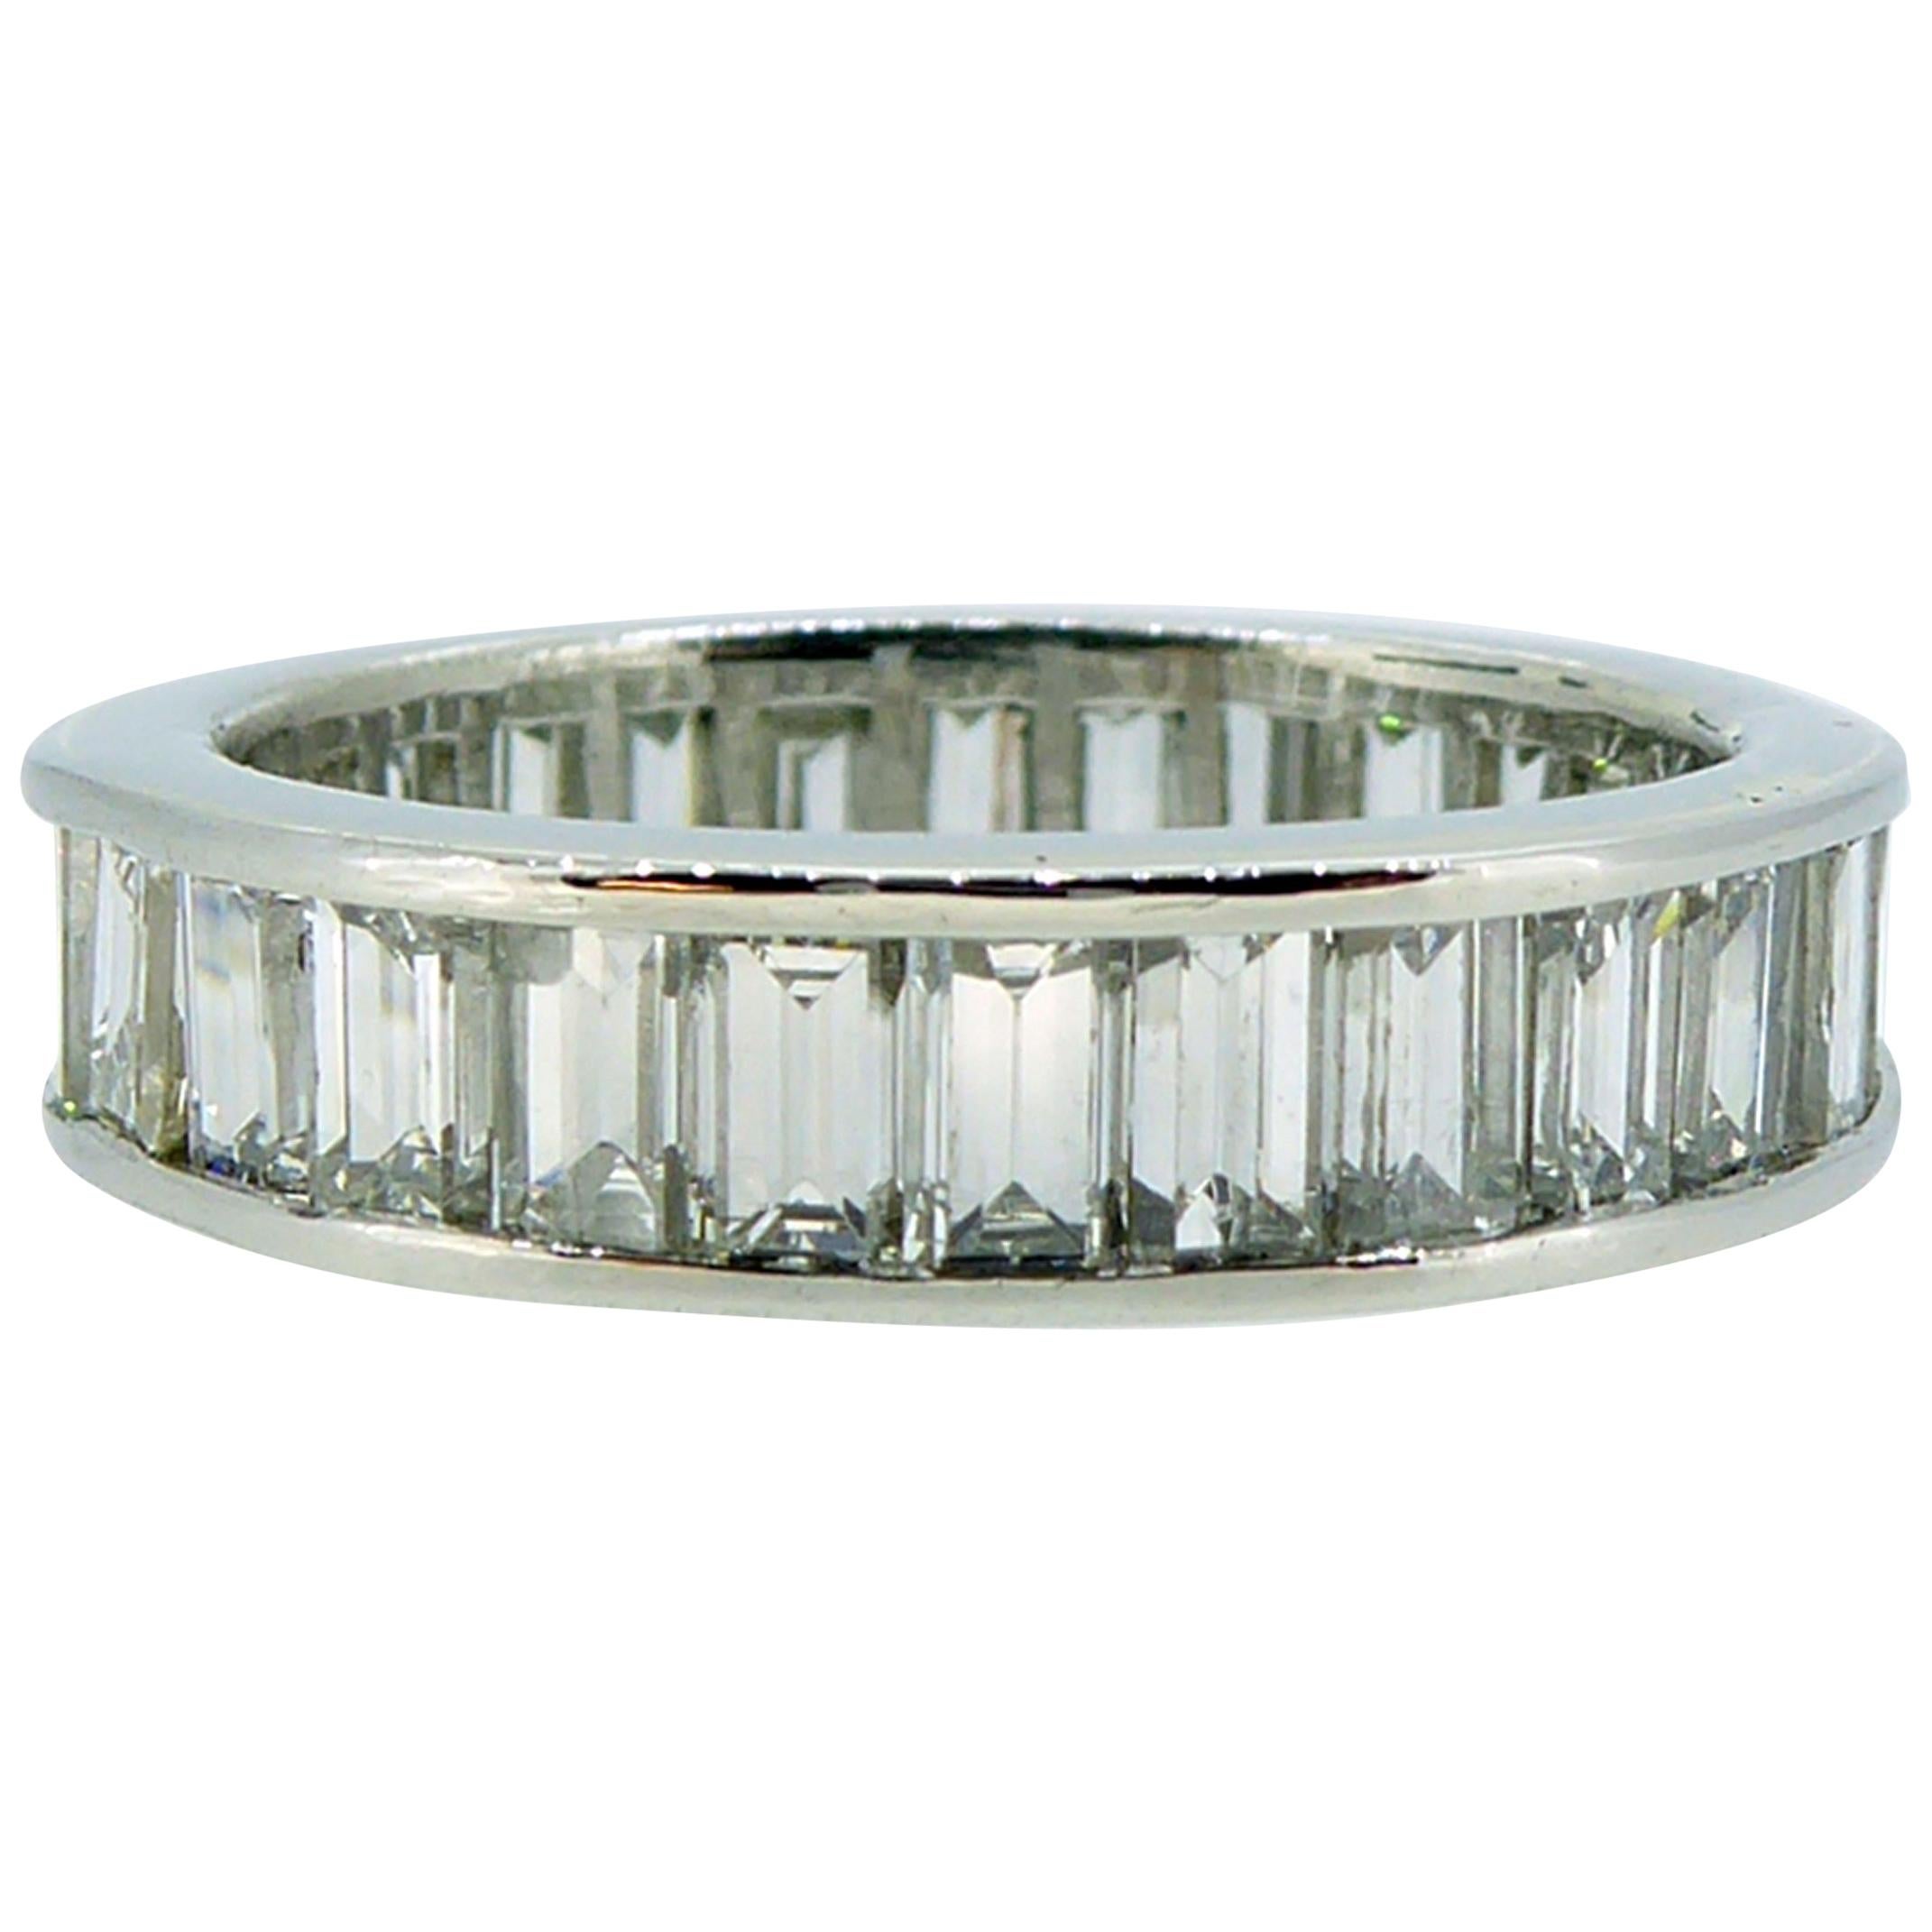 4.0 Carat Diamond Eternity Wedding Ring, Baguette Cut Diamonds, White Gold